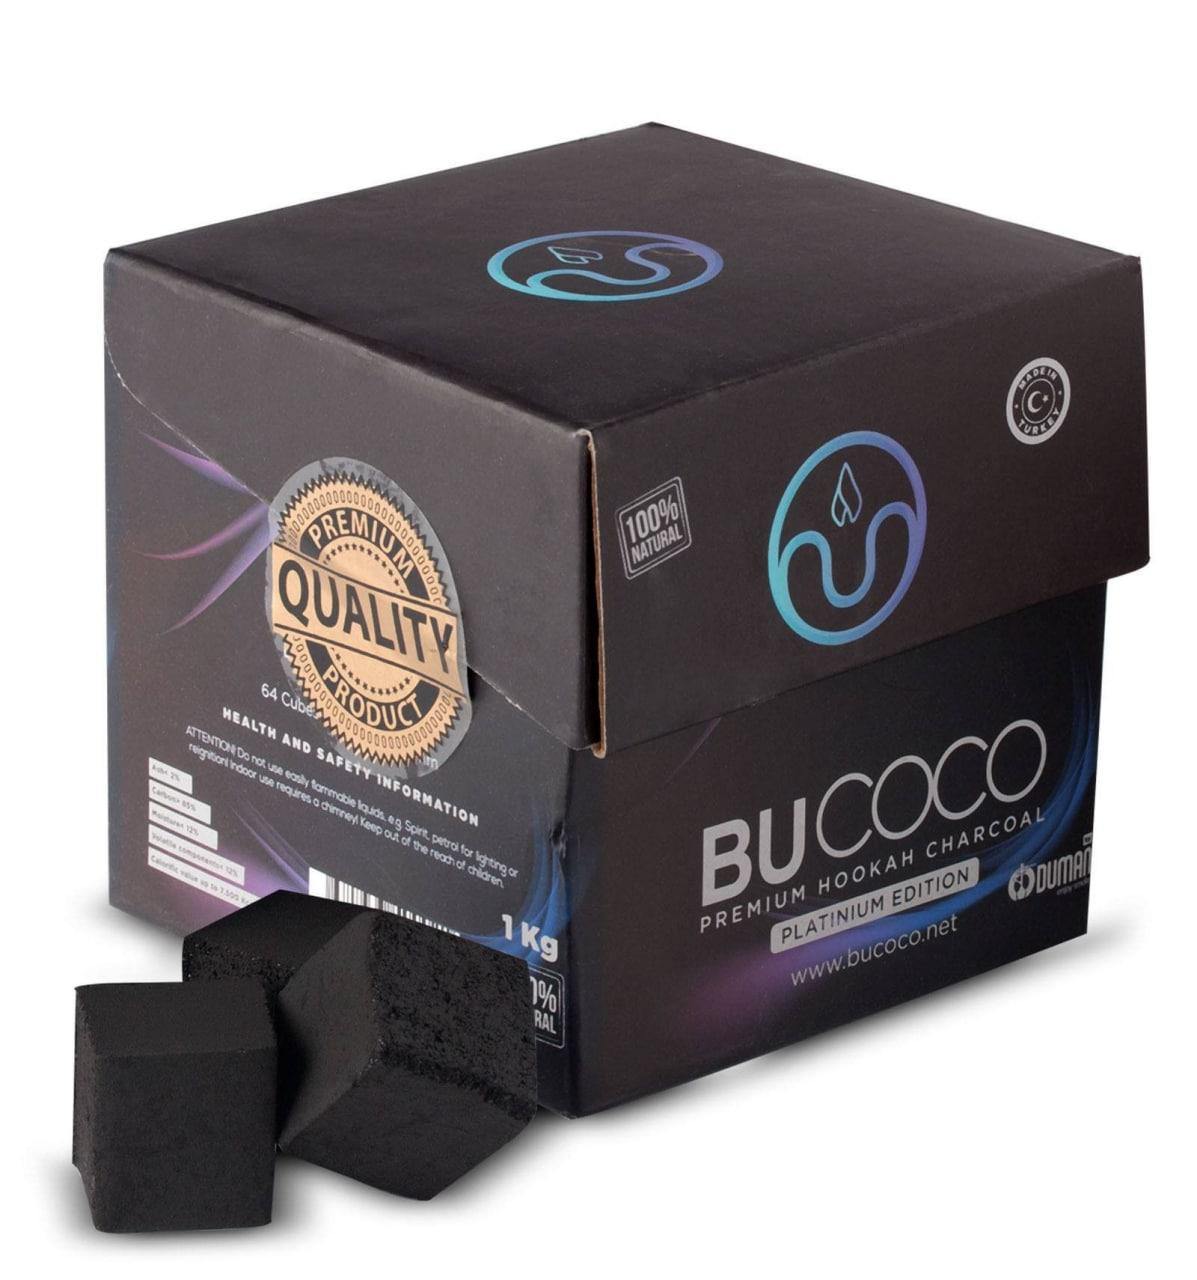 Oduman Bucoco Premium Hookah Charcoal 1kg - shishagear - UK